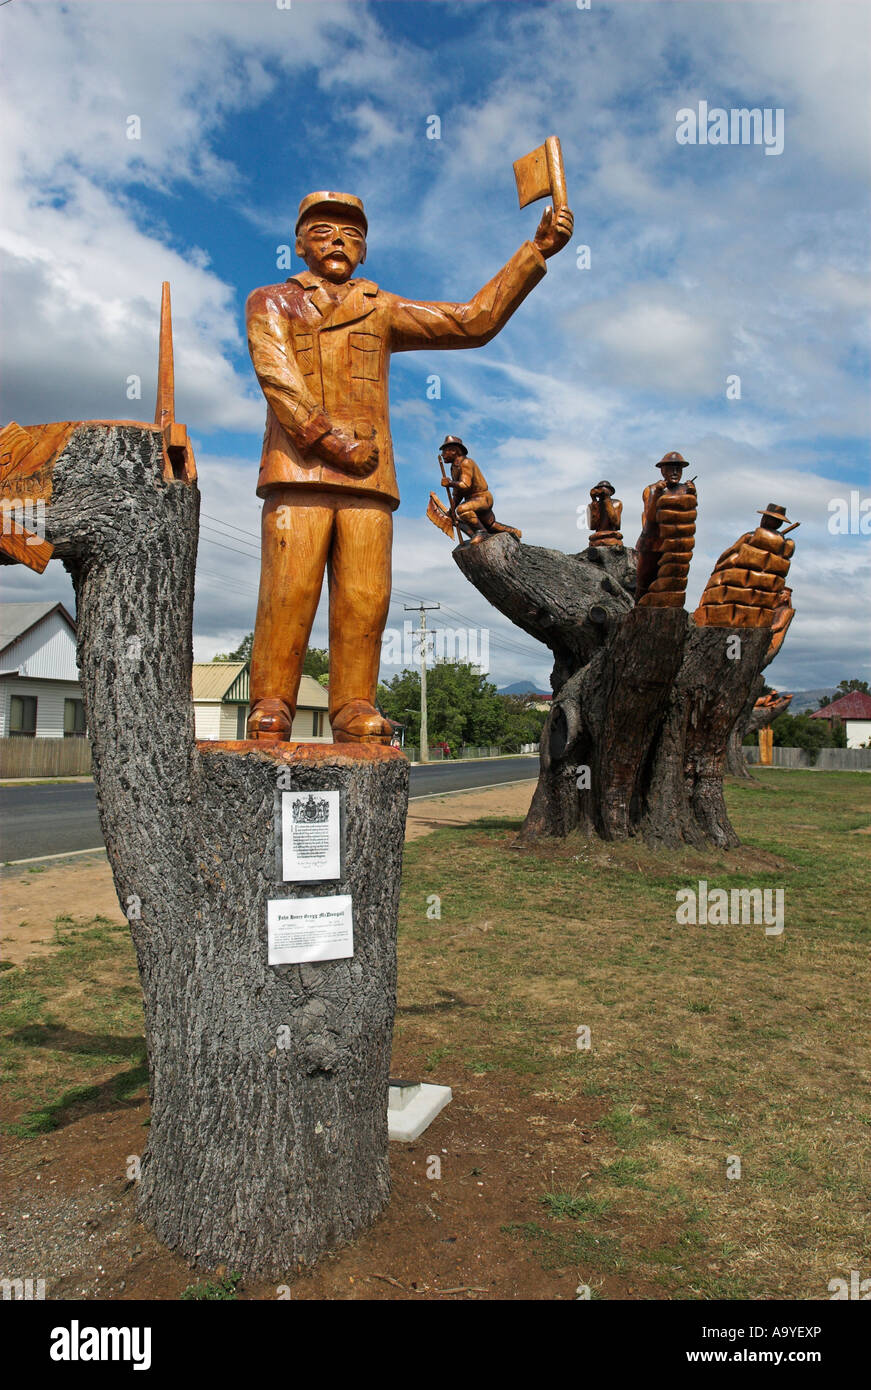 Holzskulpturen in Leggerwood, nördlichen Tasmanien, Australien Stockfoto